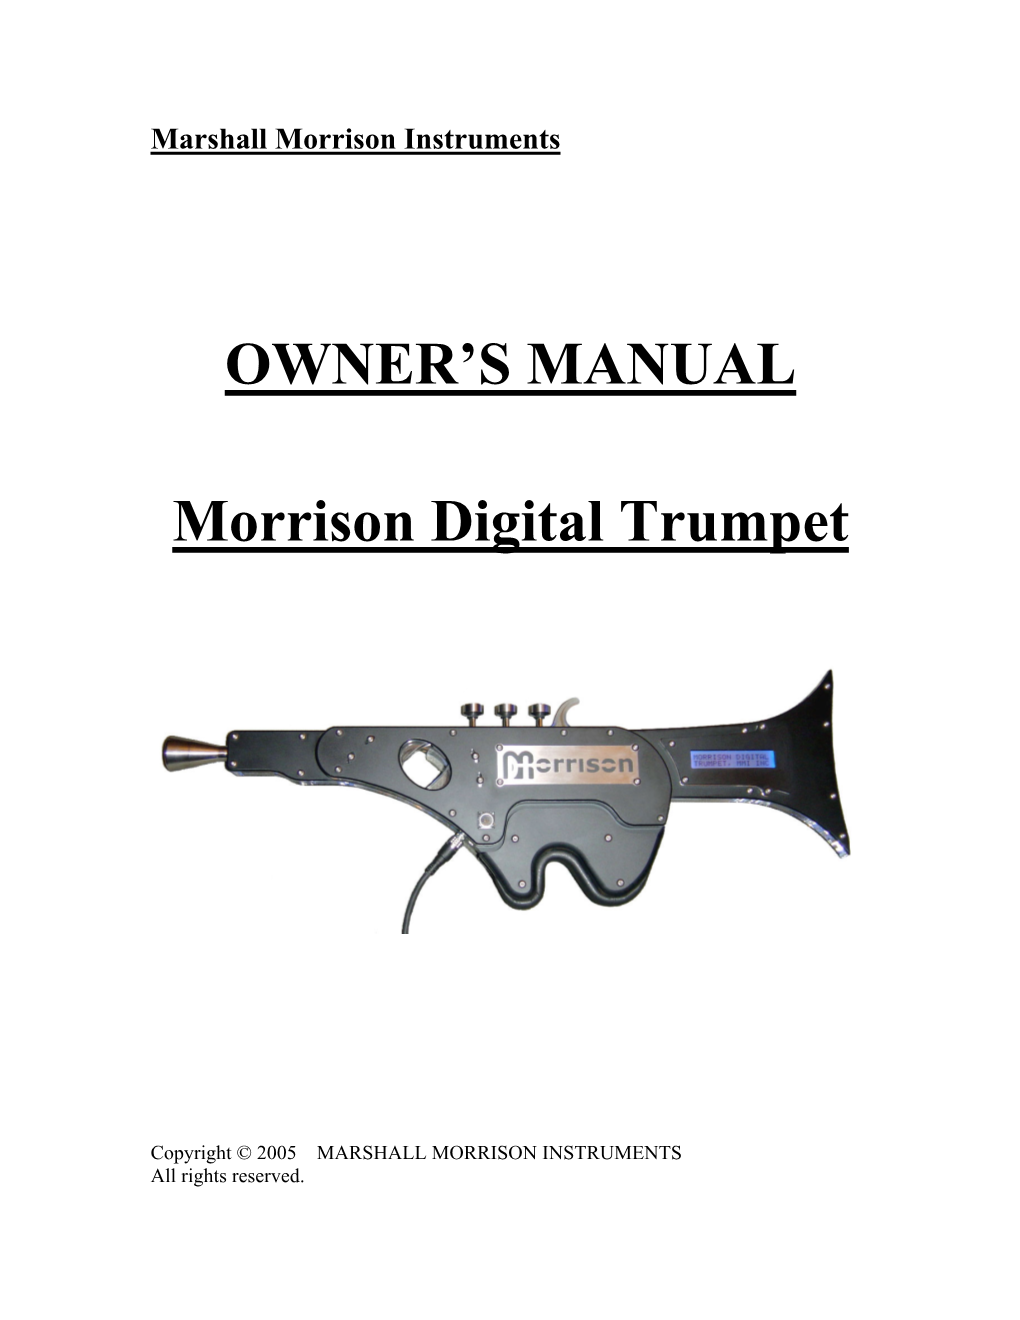 OWNER's MANUAL Morrison Digital Trumpet